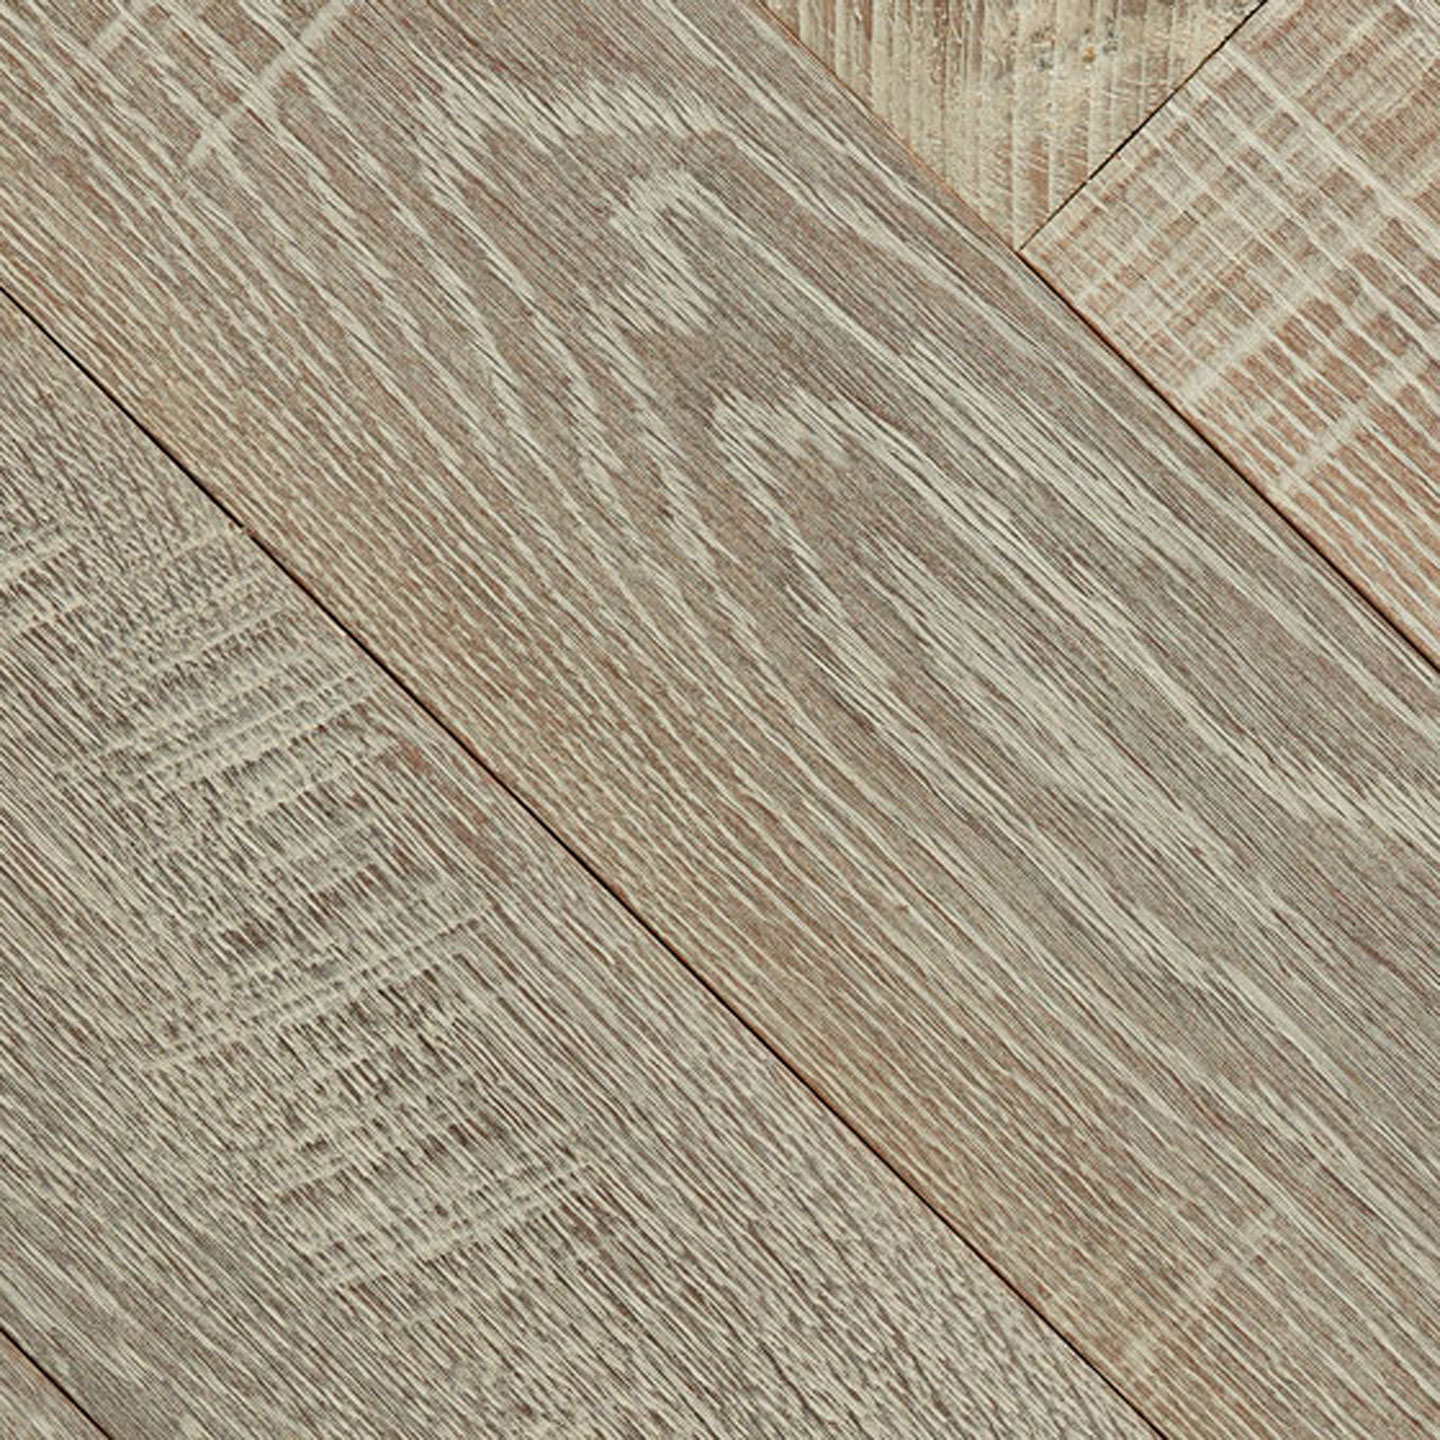 Rustic White Oak Wood Flooring 